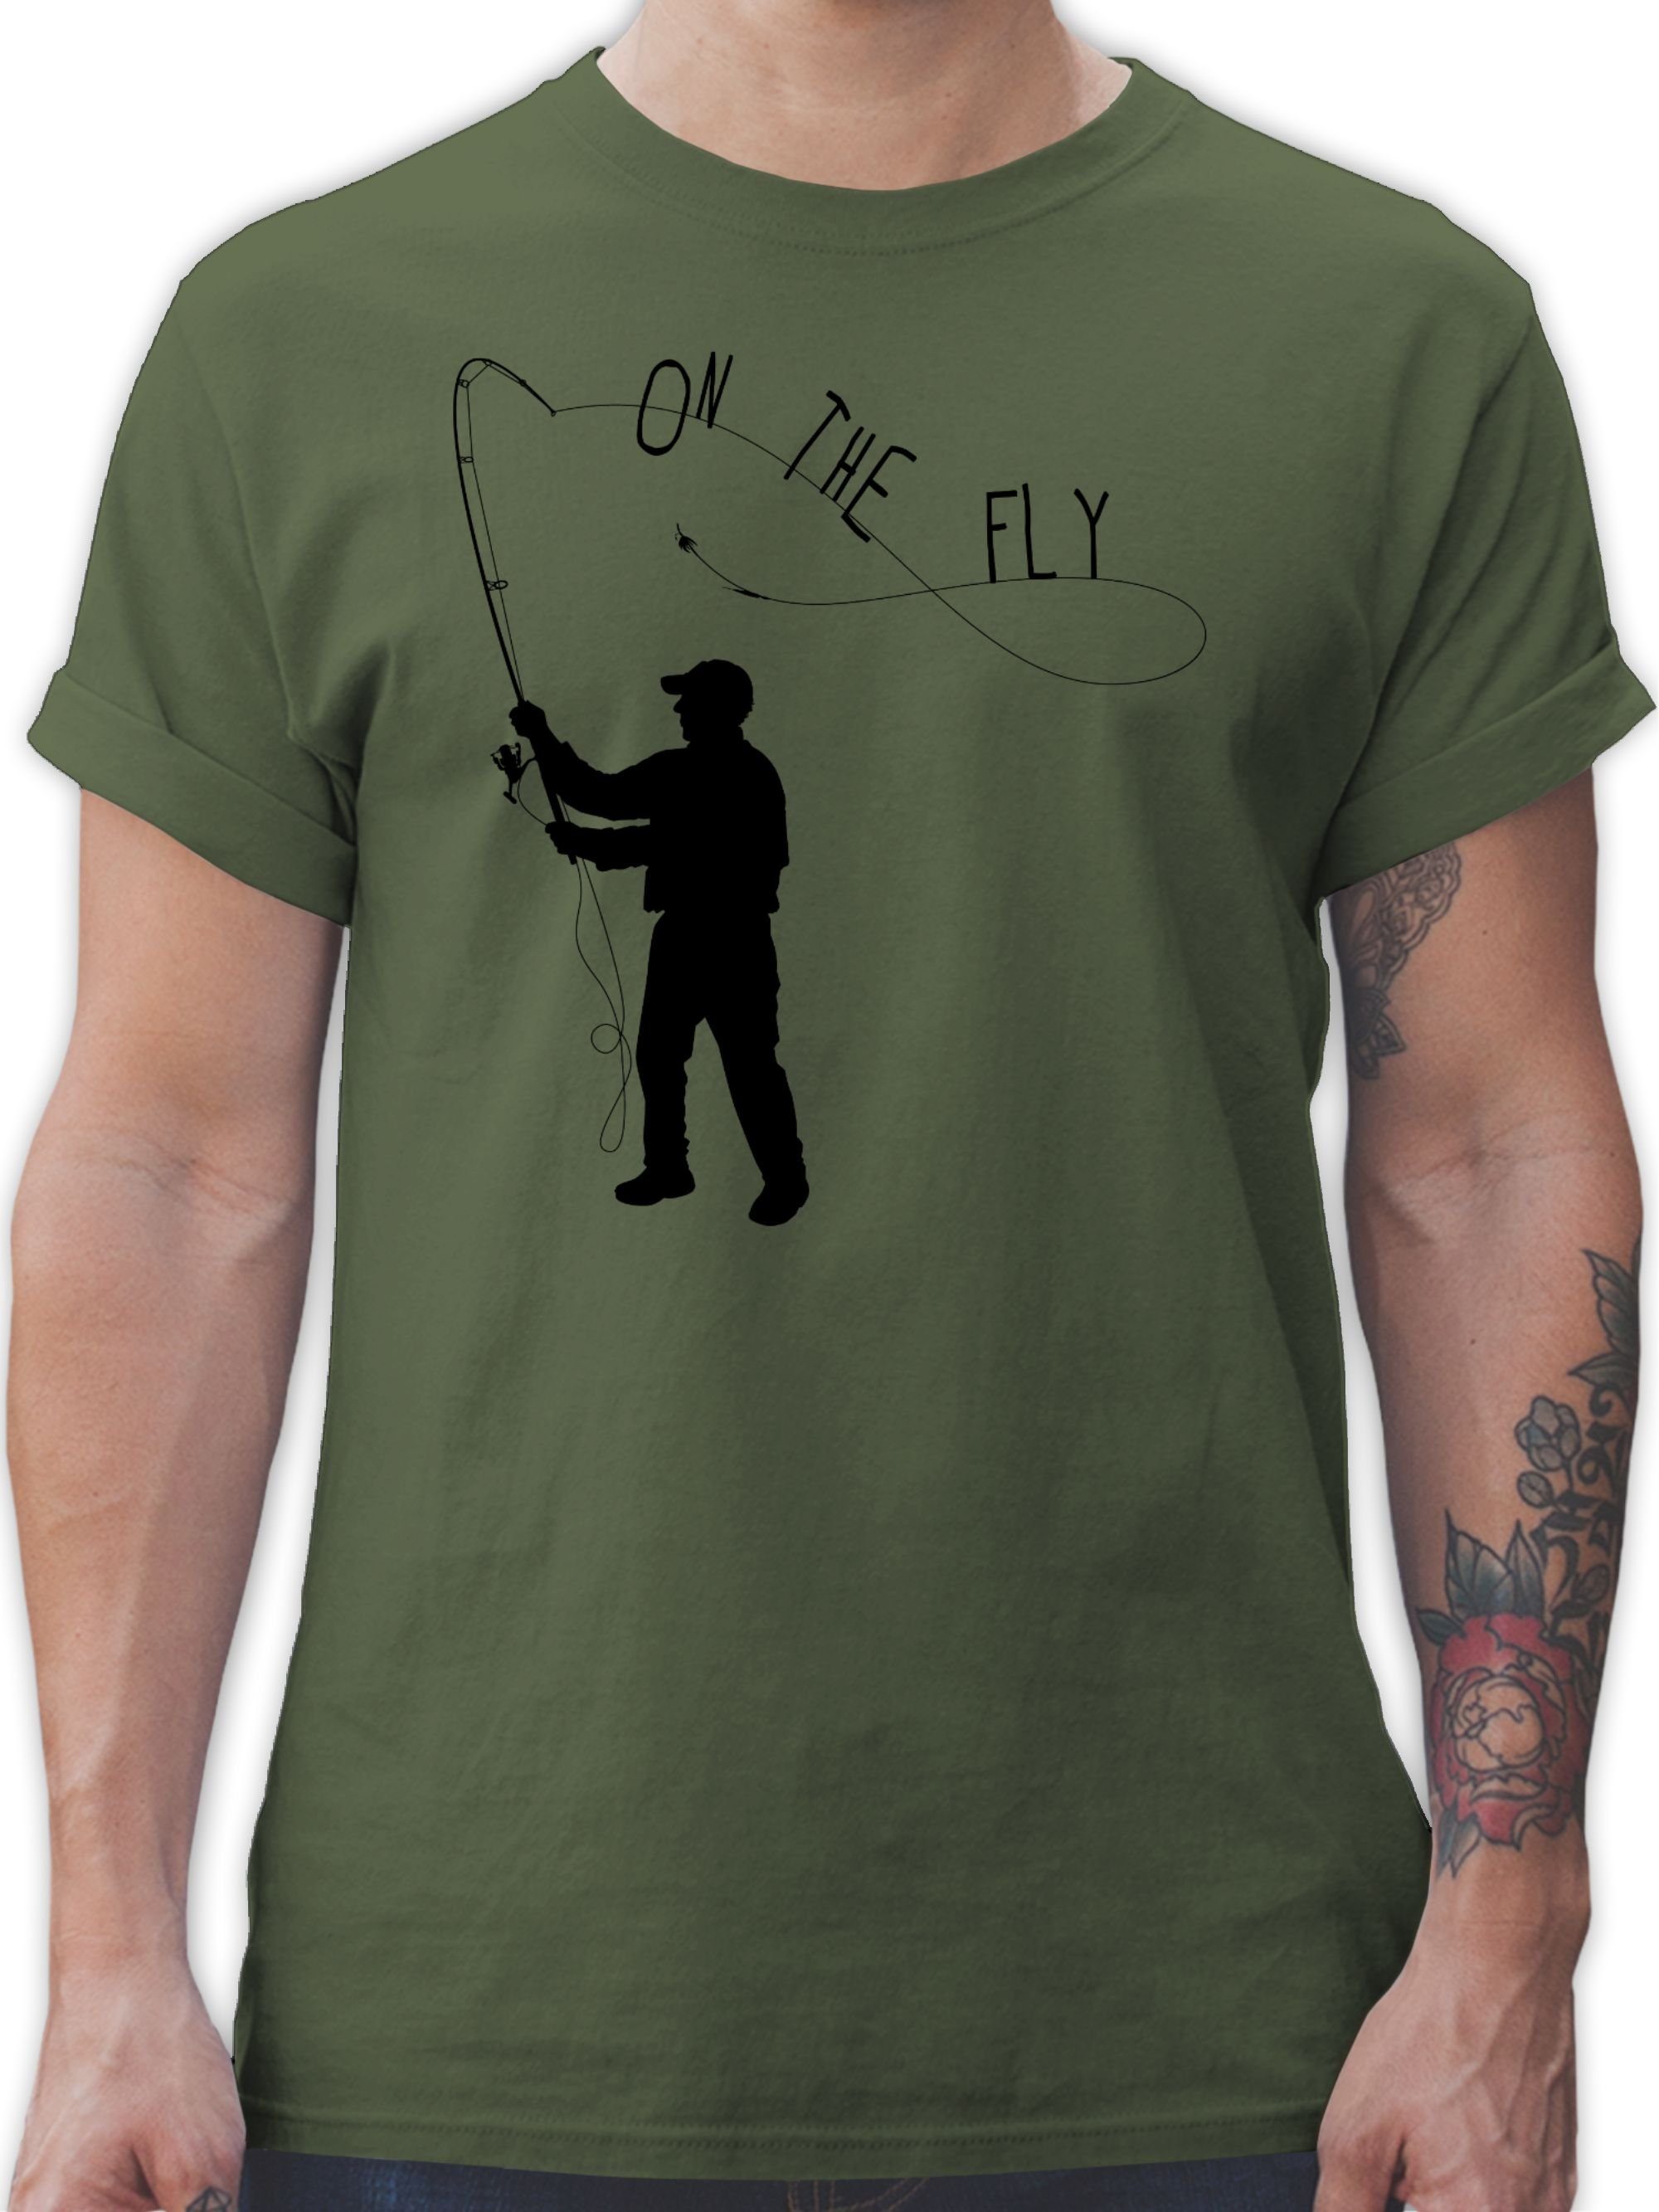 Shirtracer T-Shirt Fishing - On the Fly Angler Geschenke 2 Army Grün